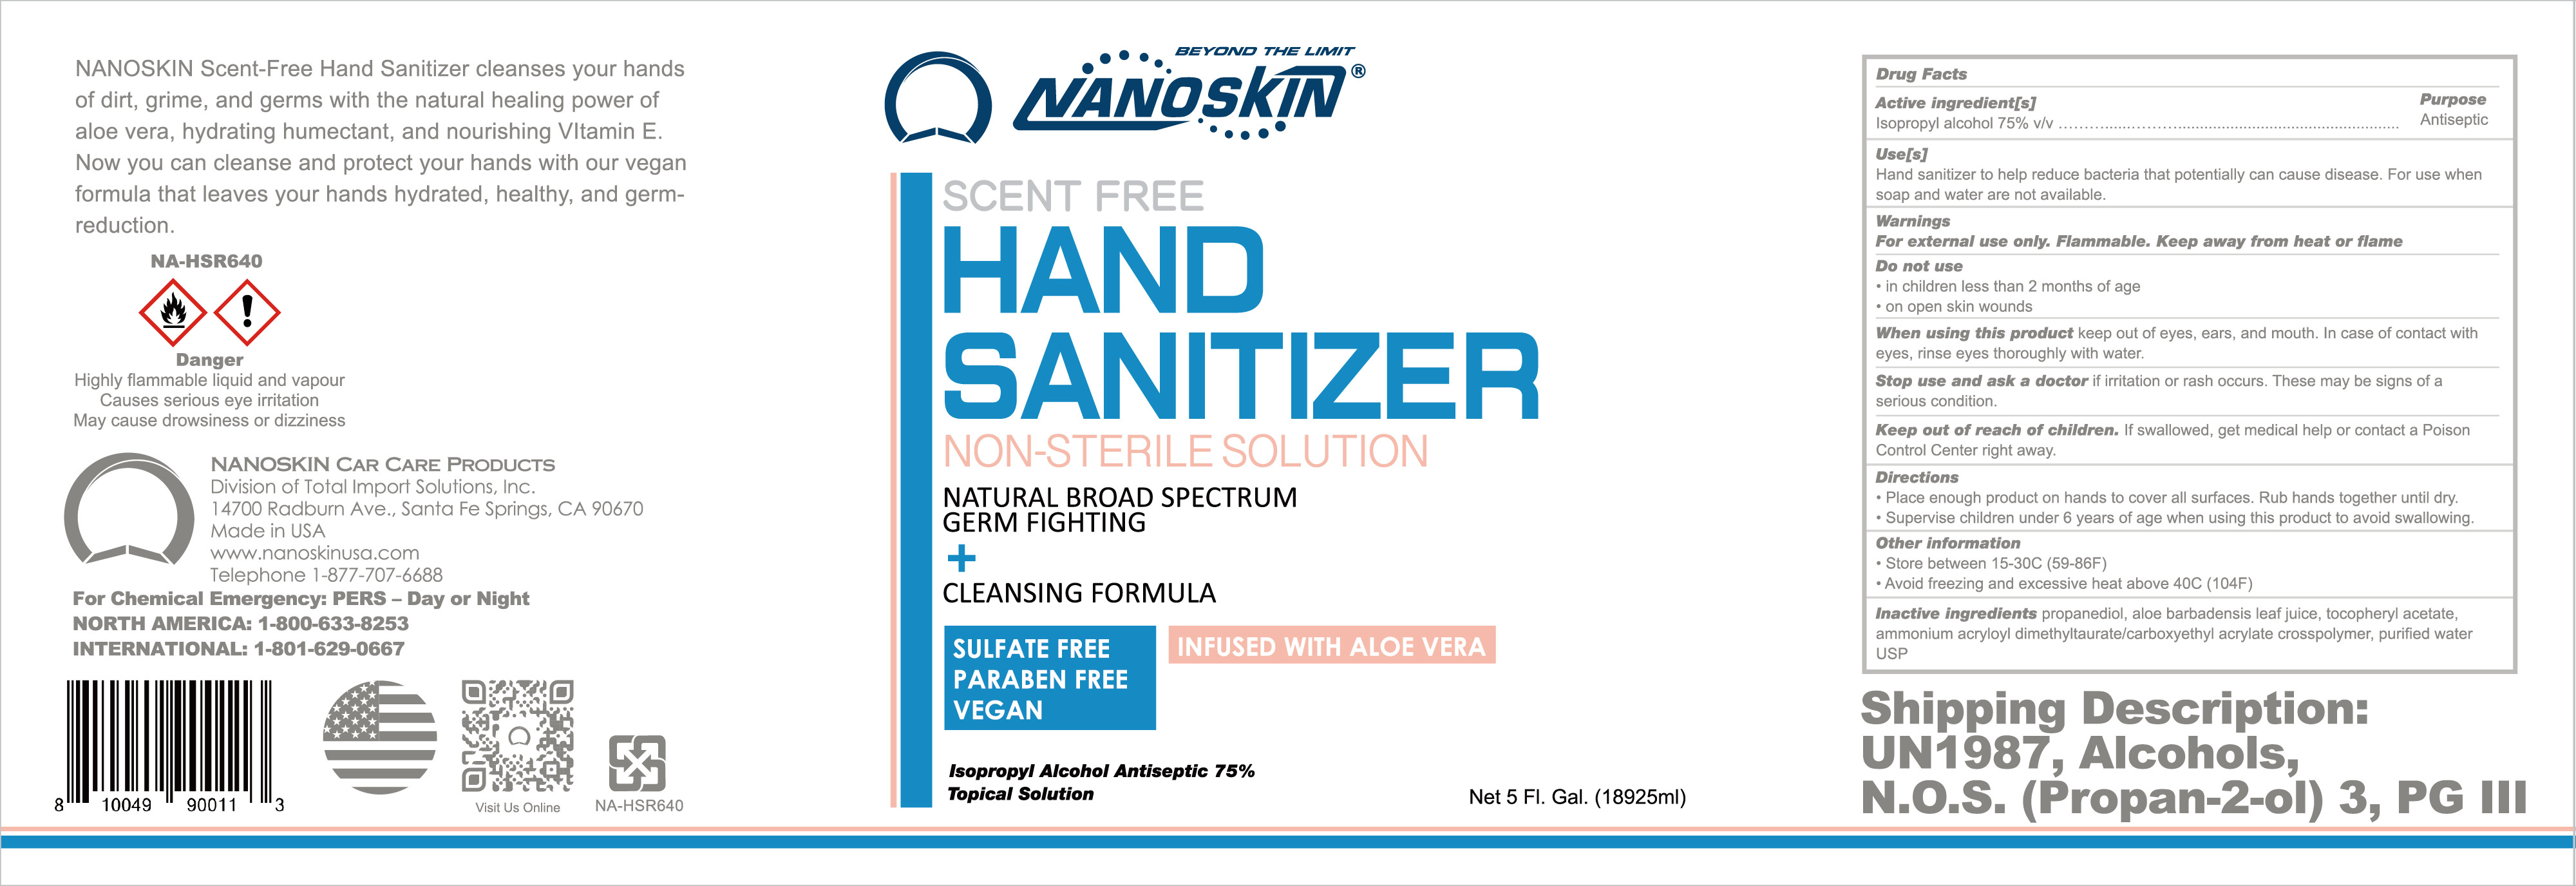 Nanoskin Scent-free Hand Sanitizer - 6 oz.